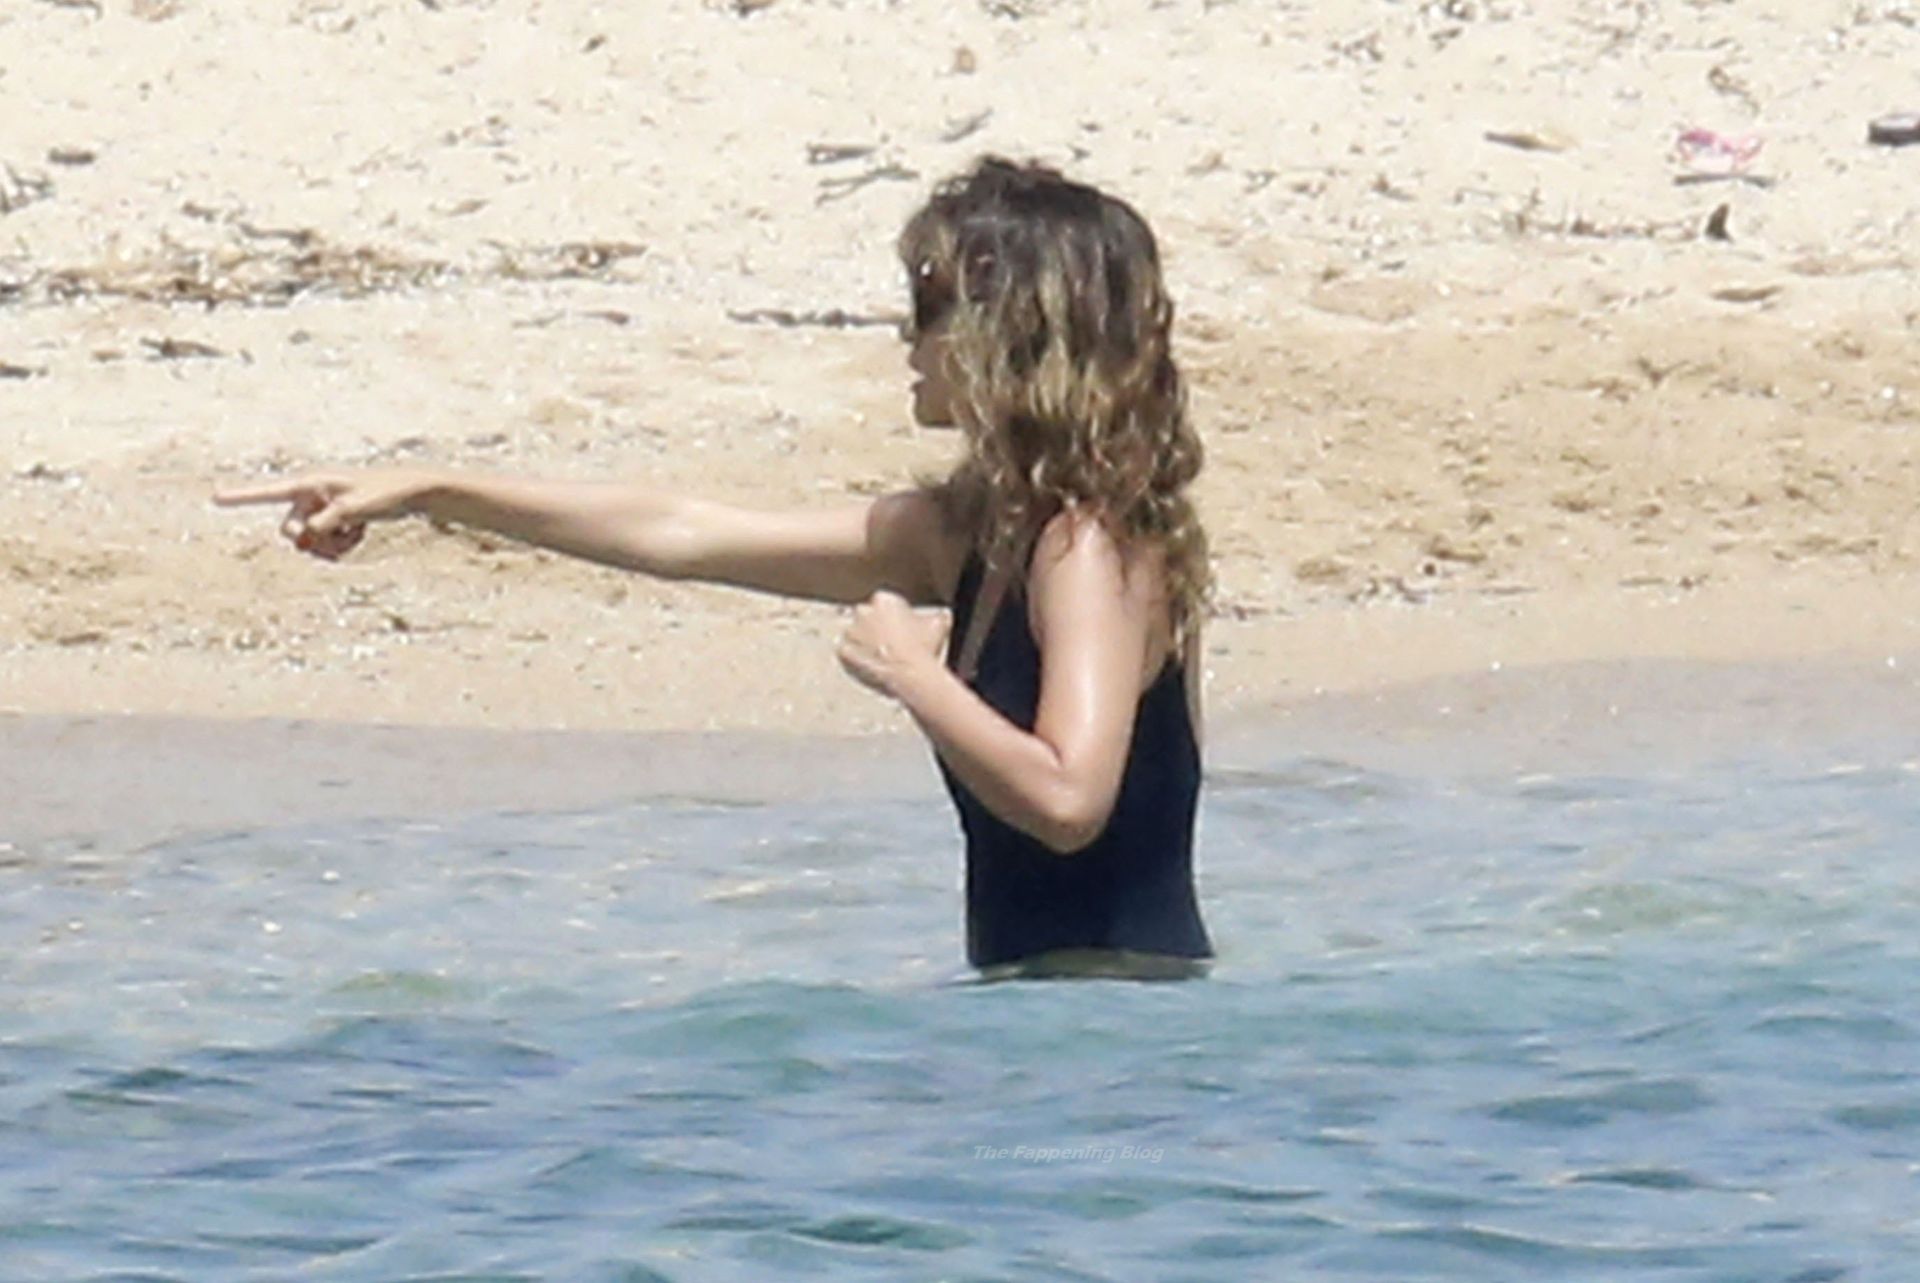 Penelope Cruz & Javier Bardem Enjoy a Day at the Beach in Sardinia (24 Photos)